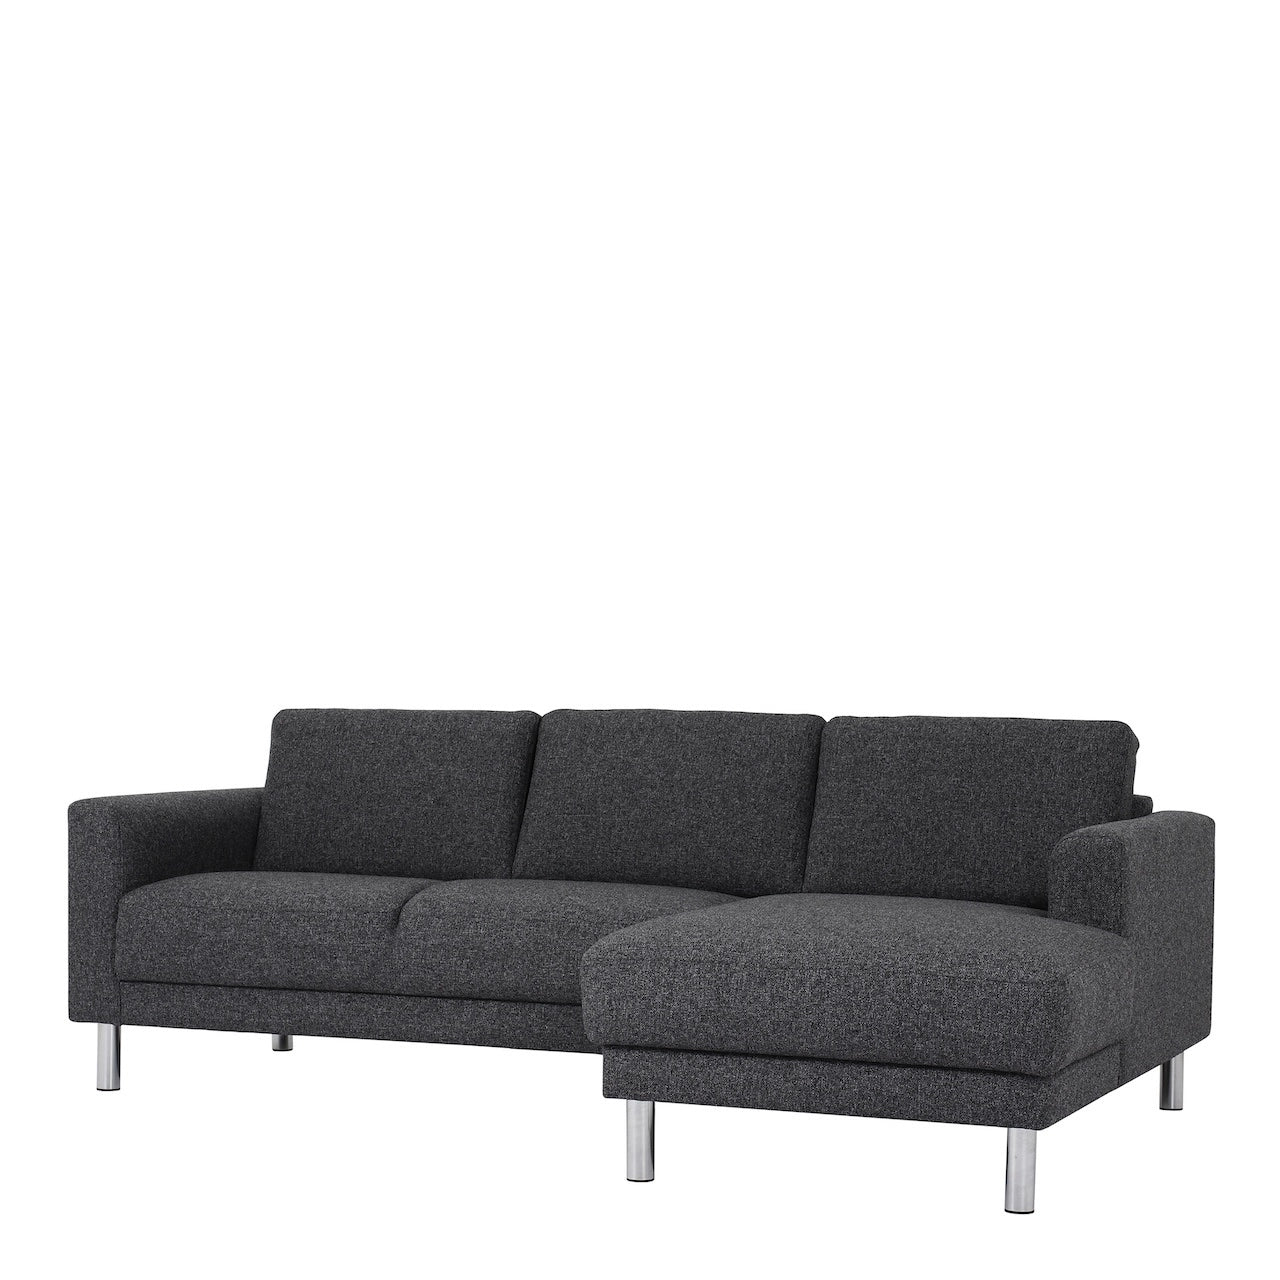 Furniture To Go Cleveland Chaiselongue Sofa (RH) in Nova Anthracite